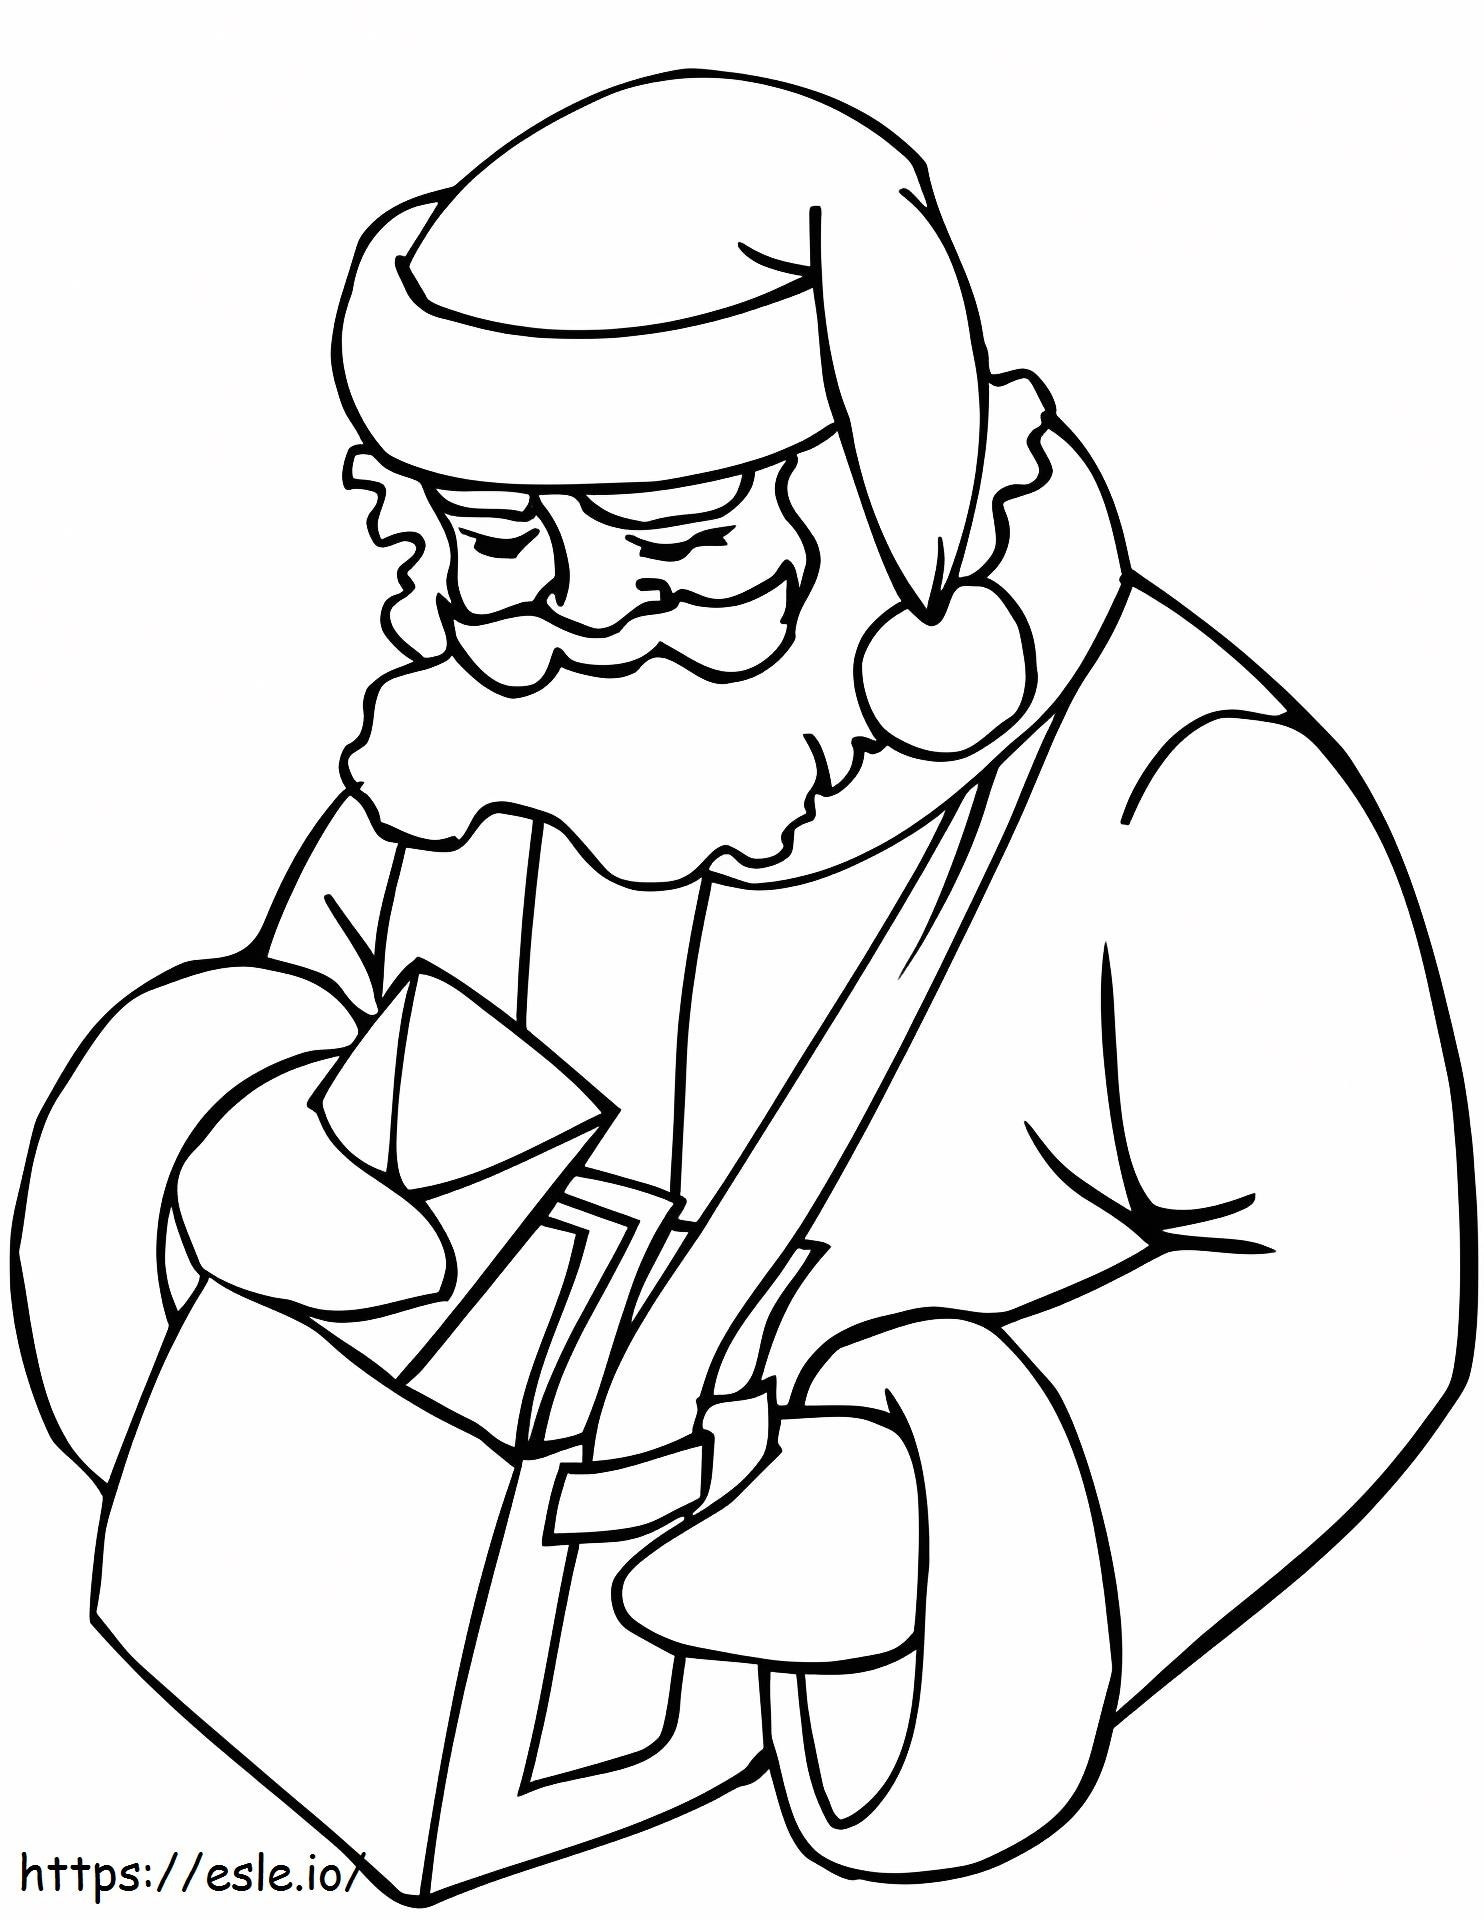 Father Christmas Postman coloring page